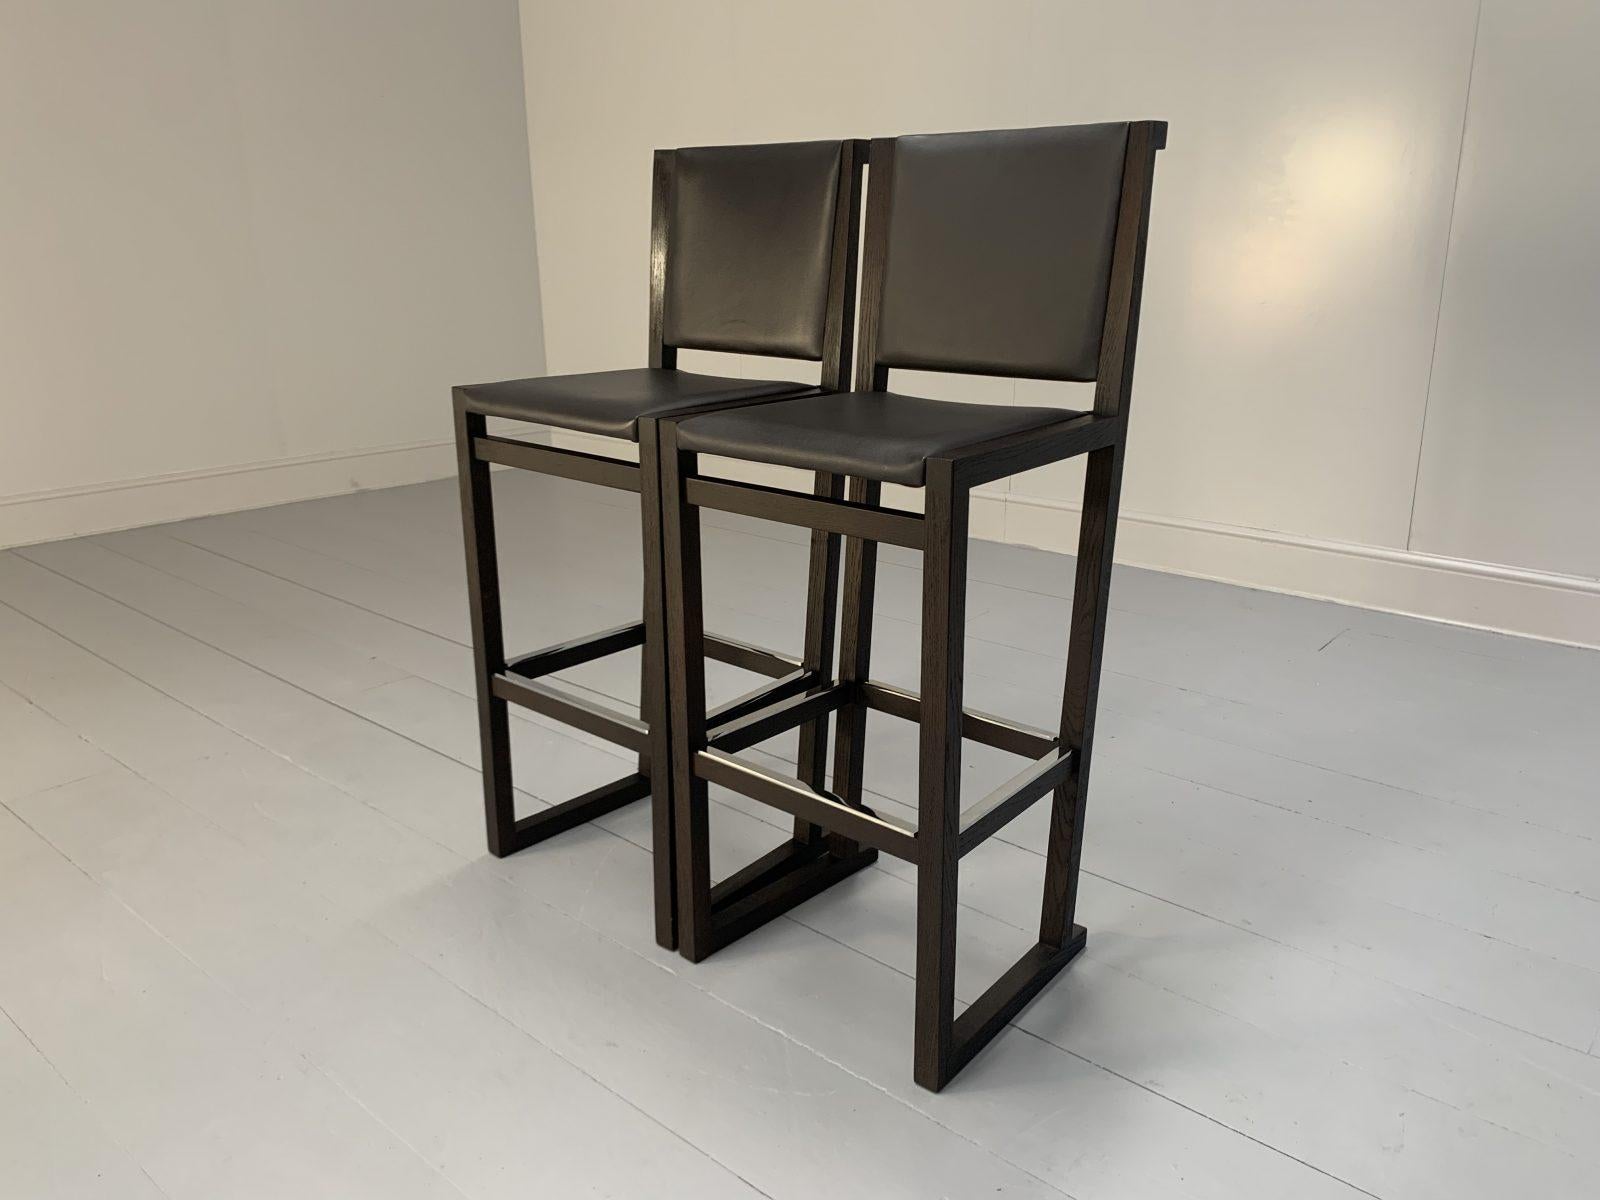 Contemporary Pair of B&B Italia “Musa SM46G” Tall Bar Stool Chairs – In Dark Grey “Kasia” Lea For Sale